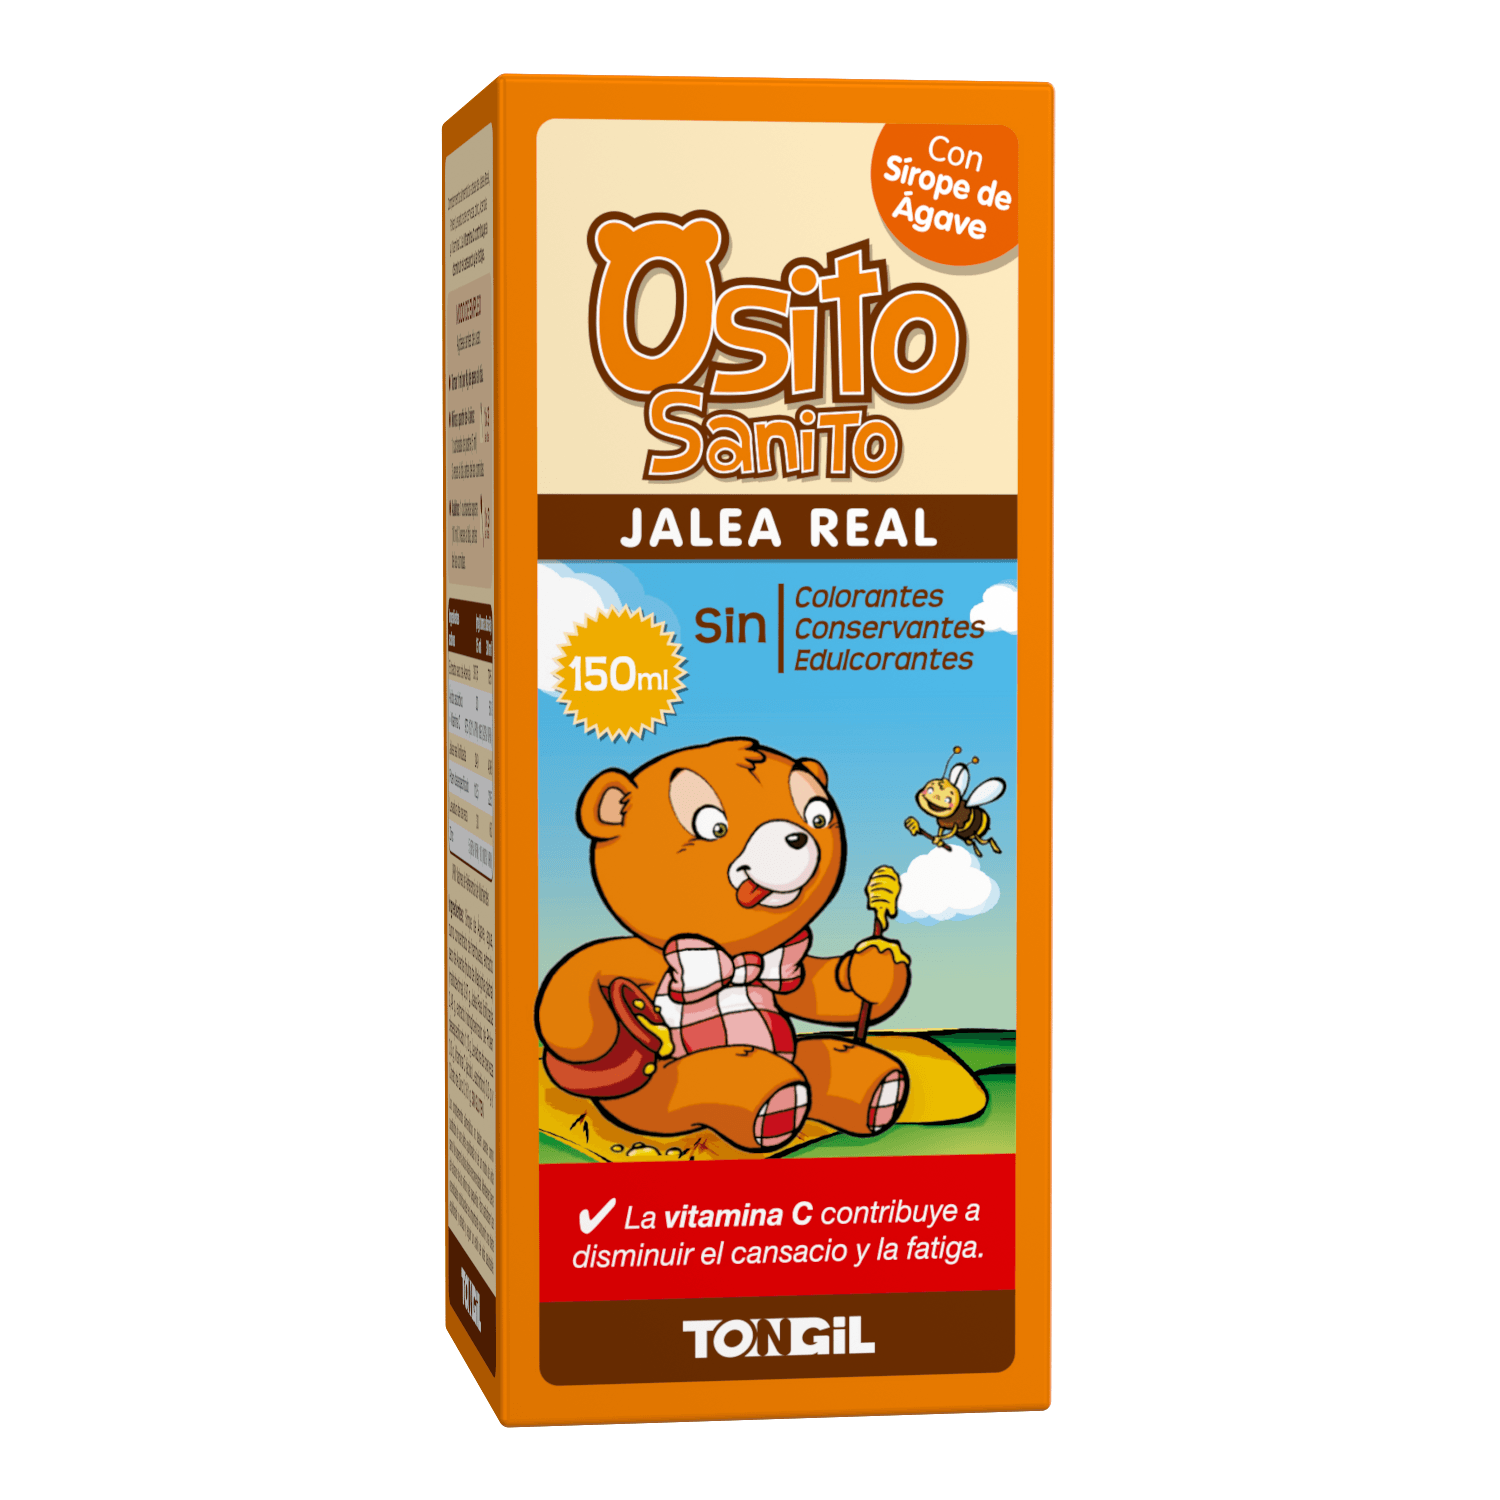 Osito Sanito Jalea Real 150 ml | Tongil - Dietetica Ferrer